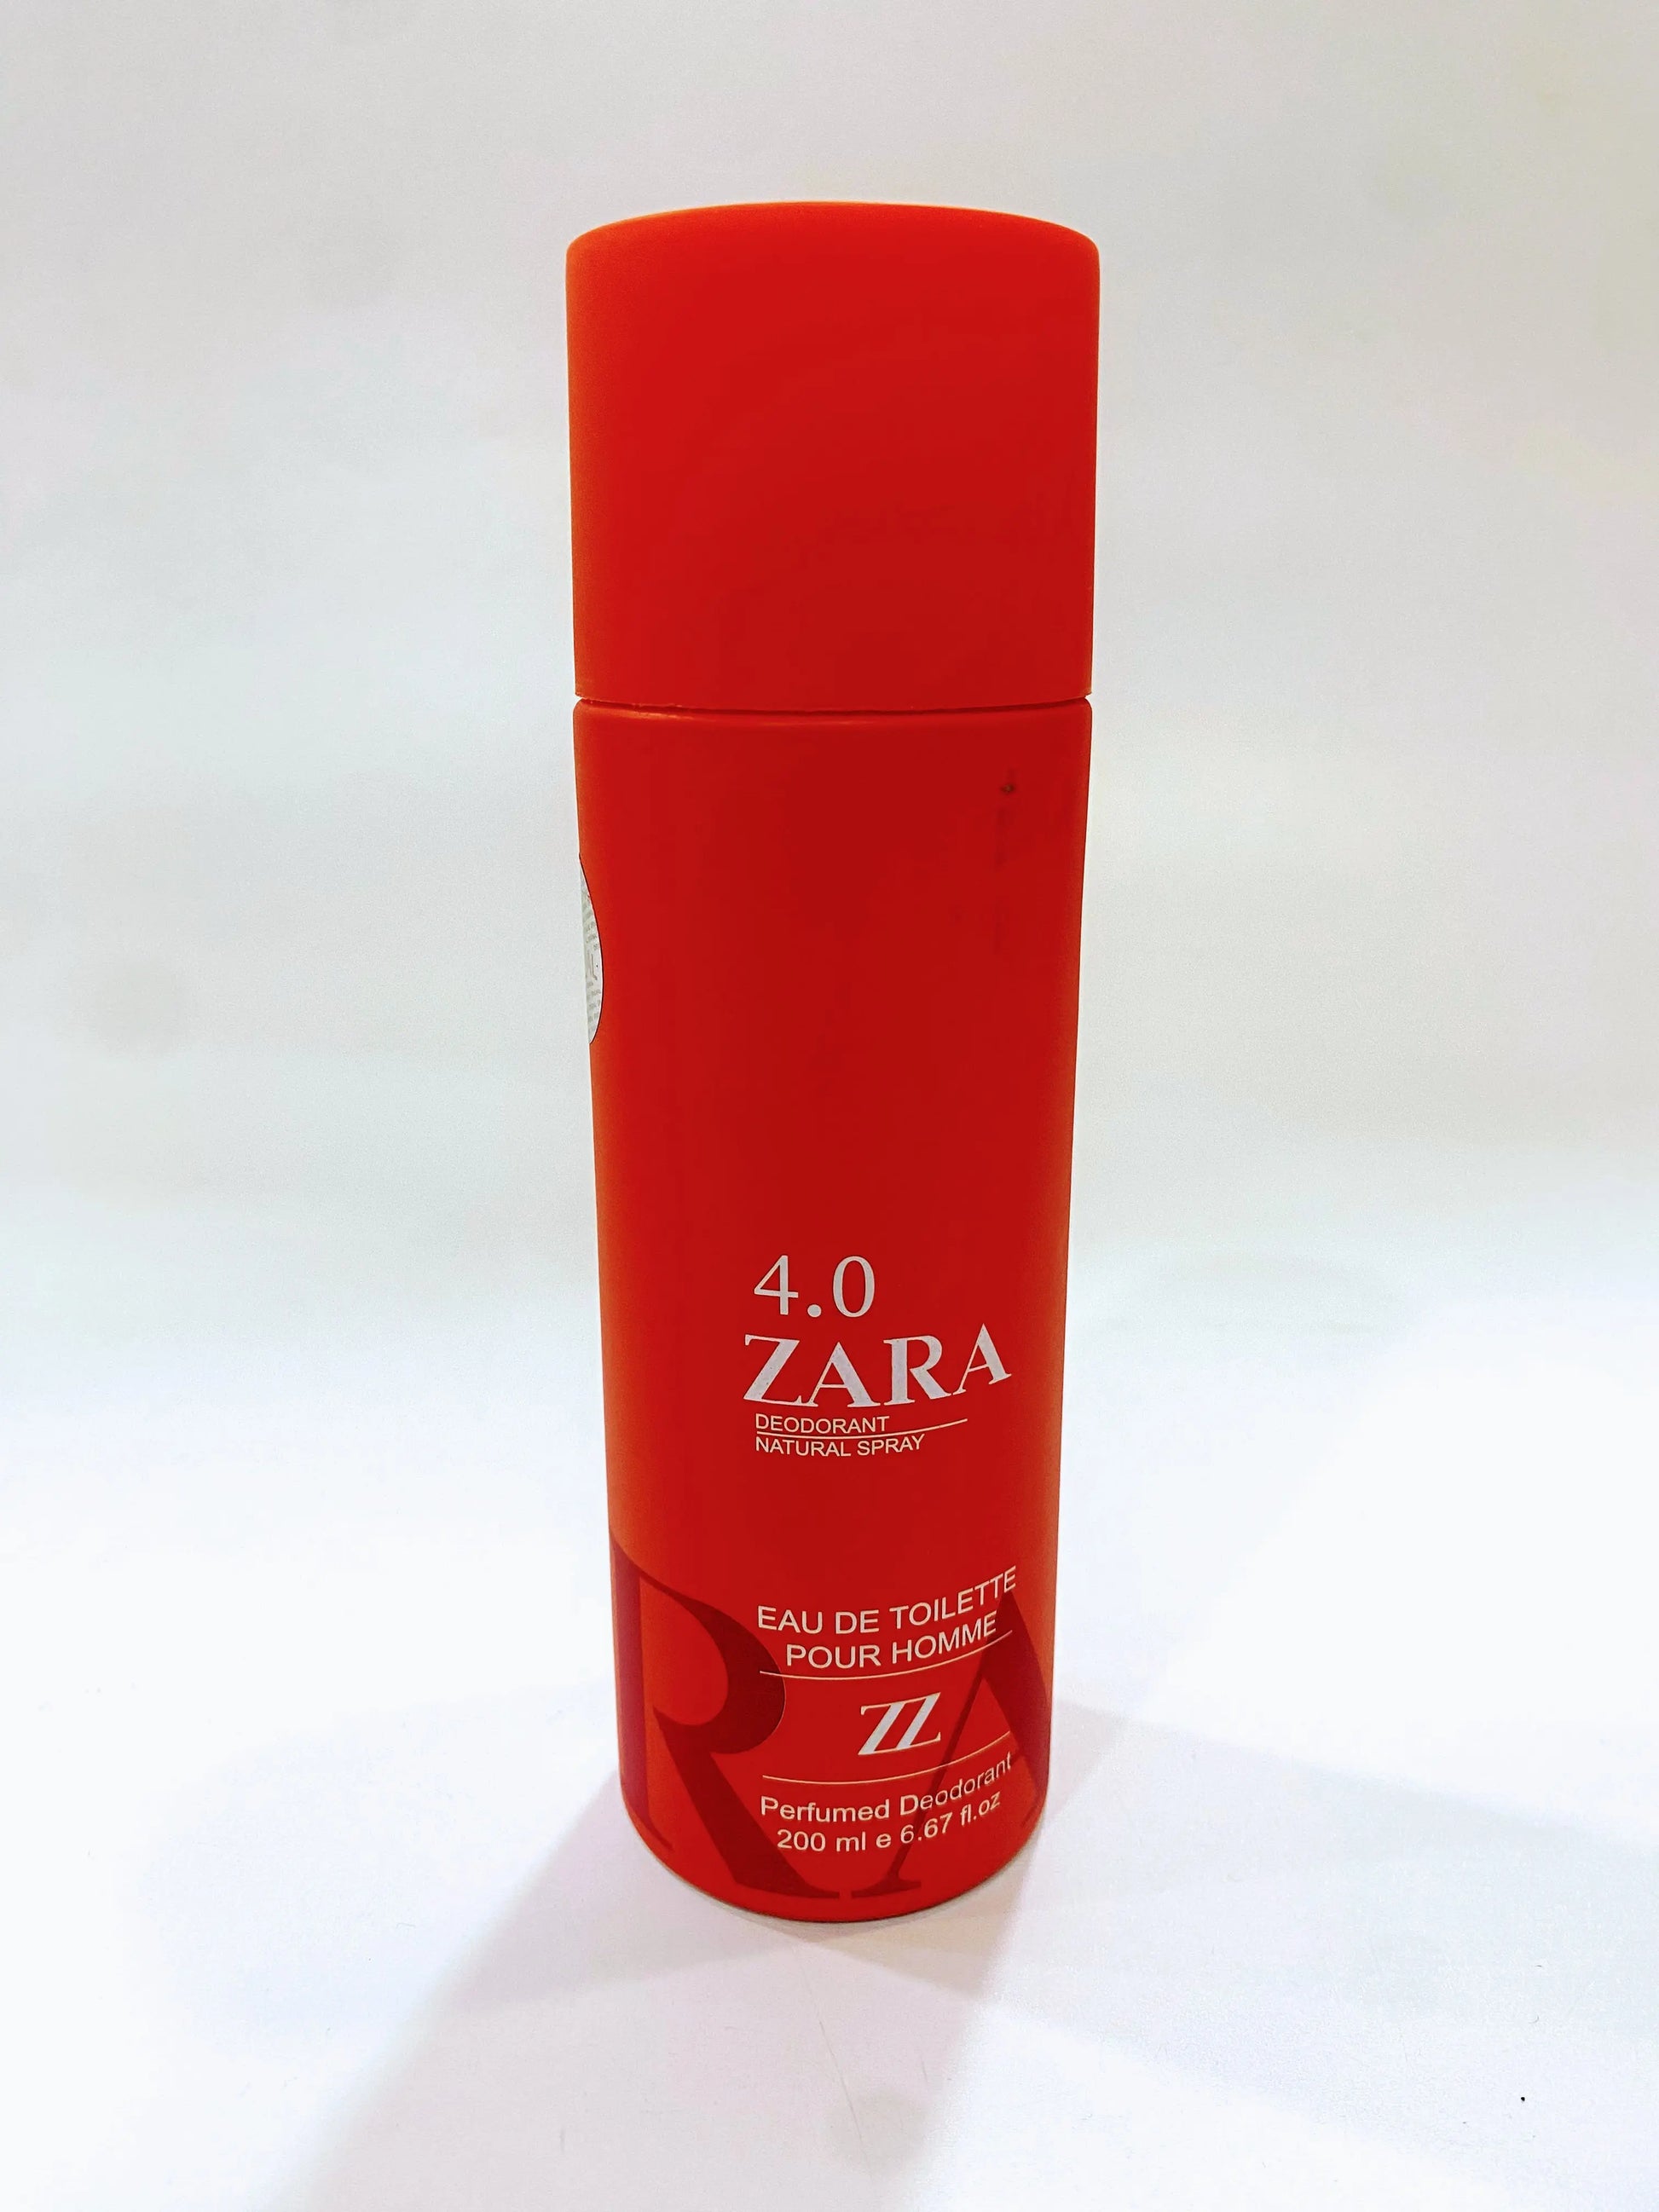 4.0 Zara Deodorant Spray for Men La Mimz Beauty & Fashion Store